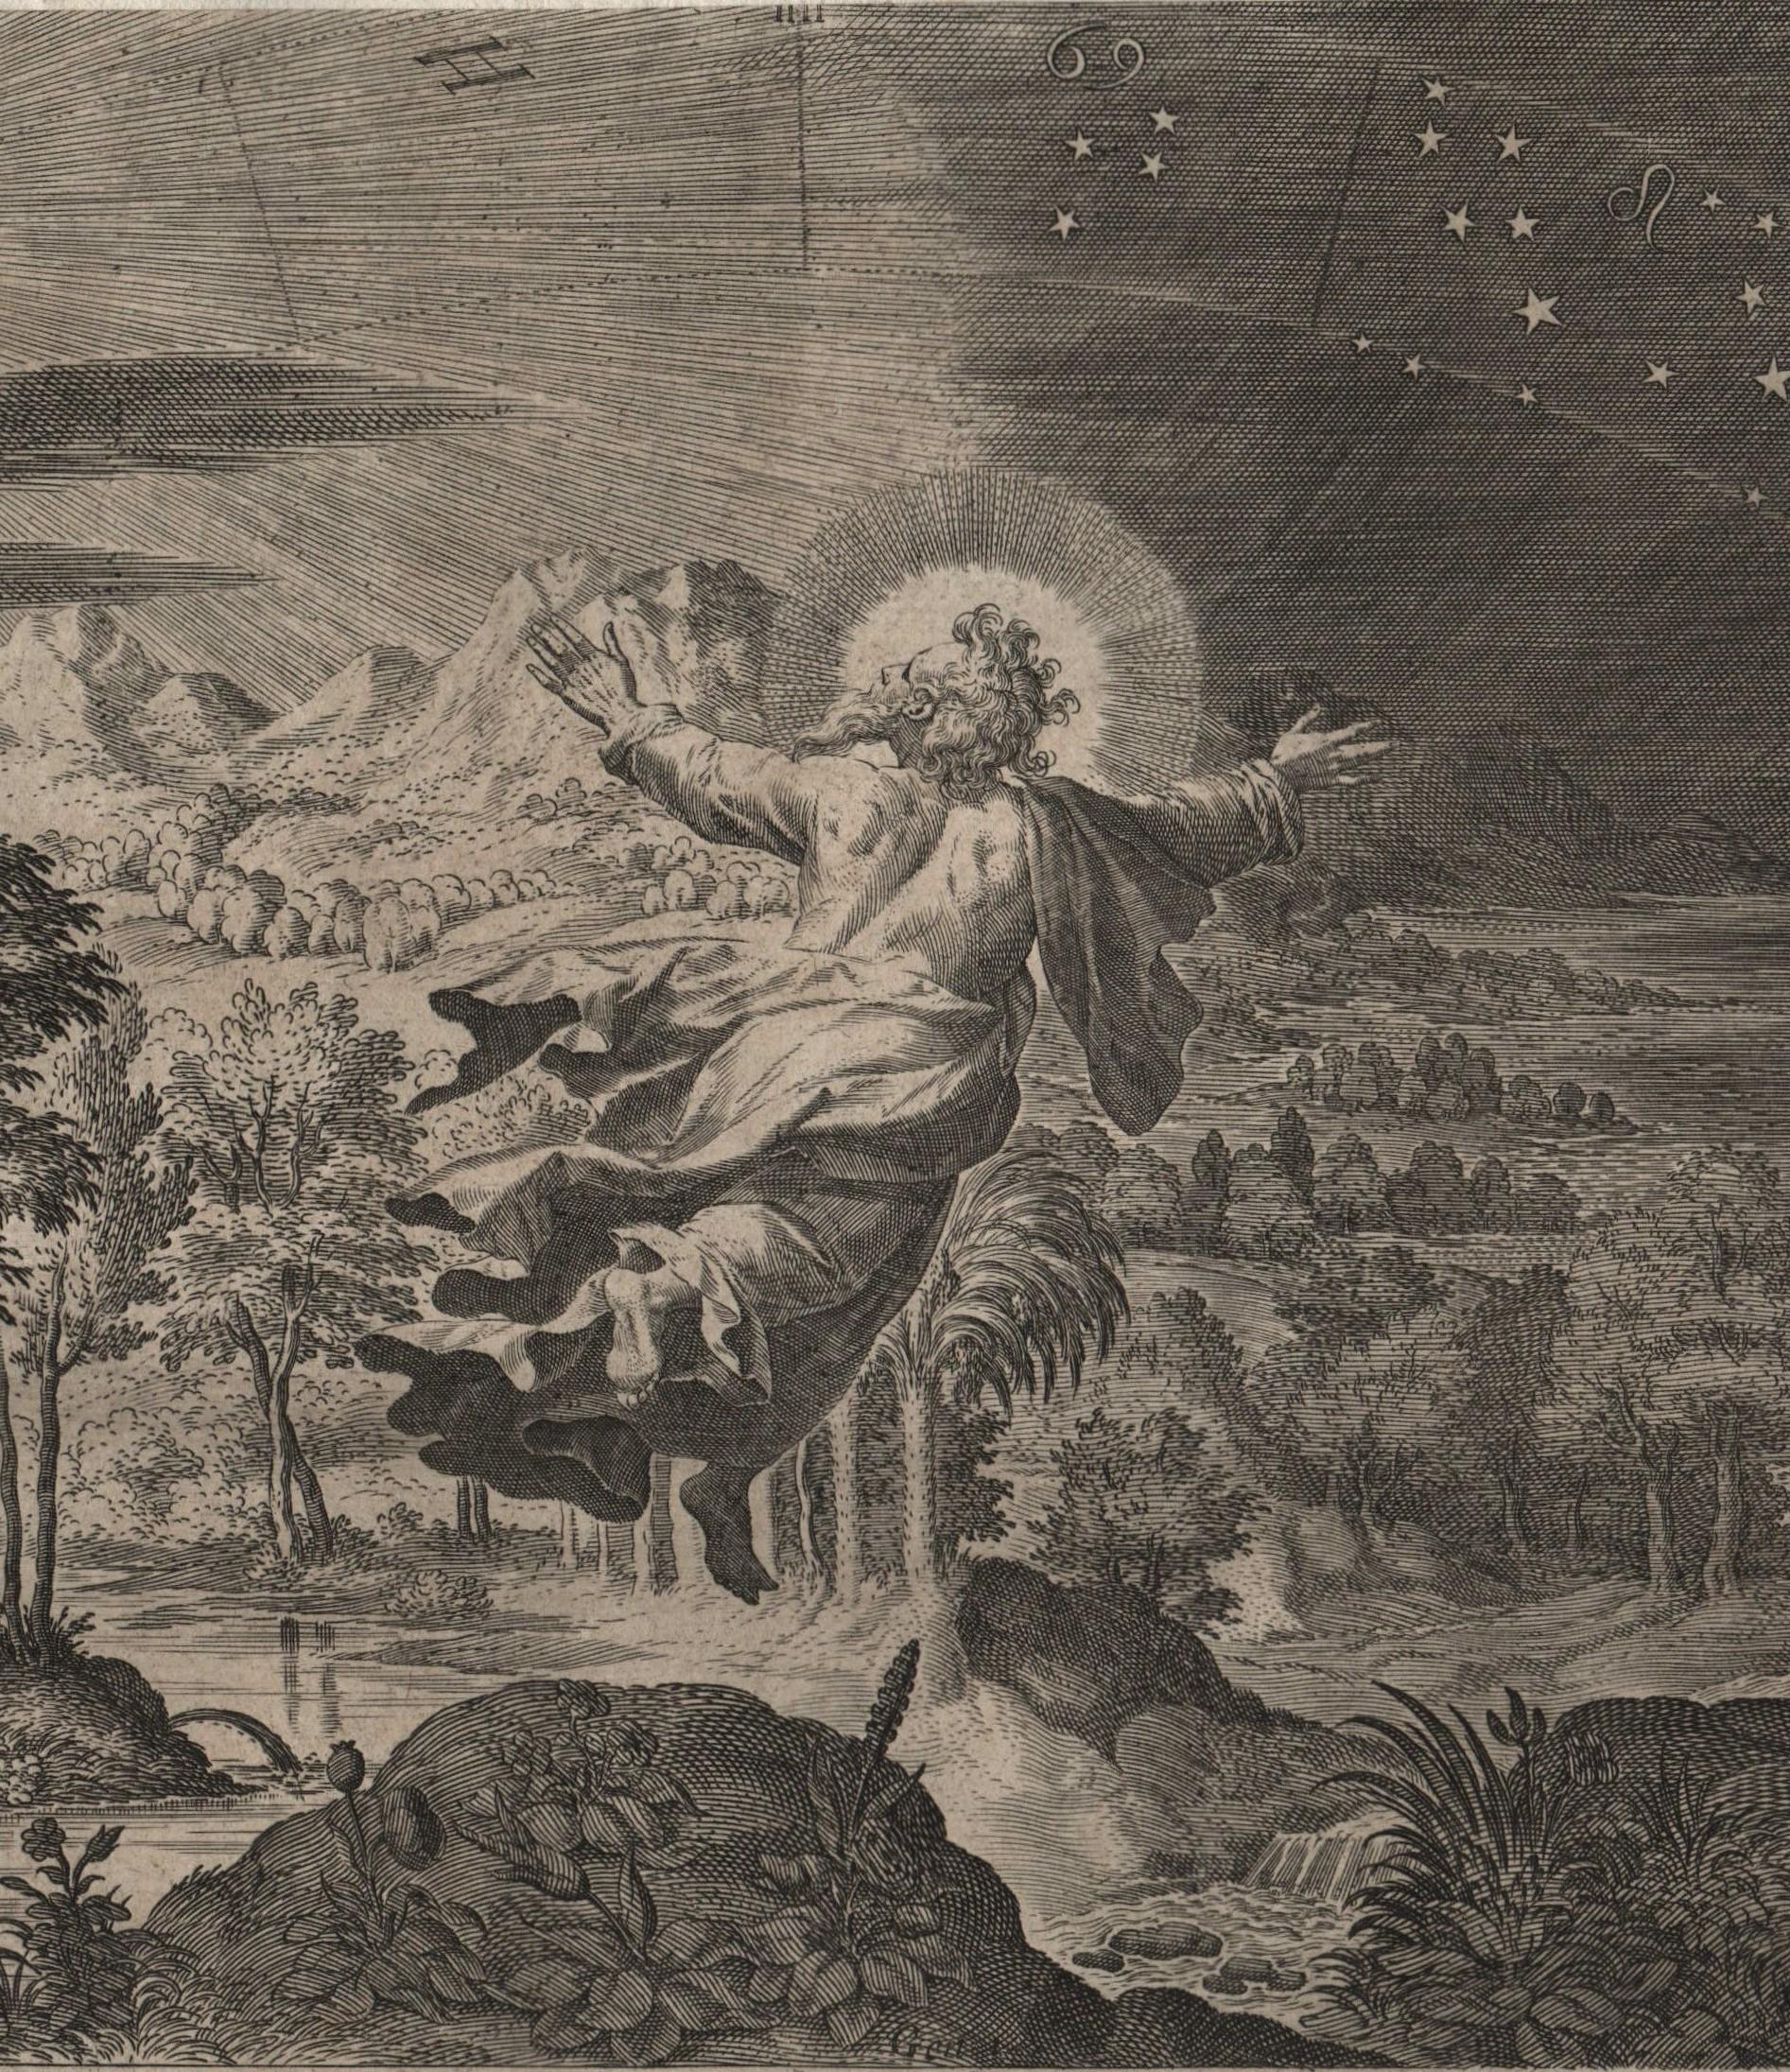 Creation! Sun, Moon, Stars - Framed 1584 Old Master Engraving Religious Bible - Gray Figurative Print by Johannes Sadeler I